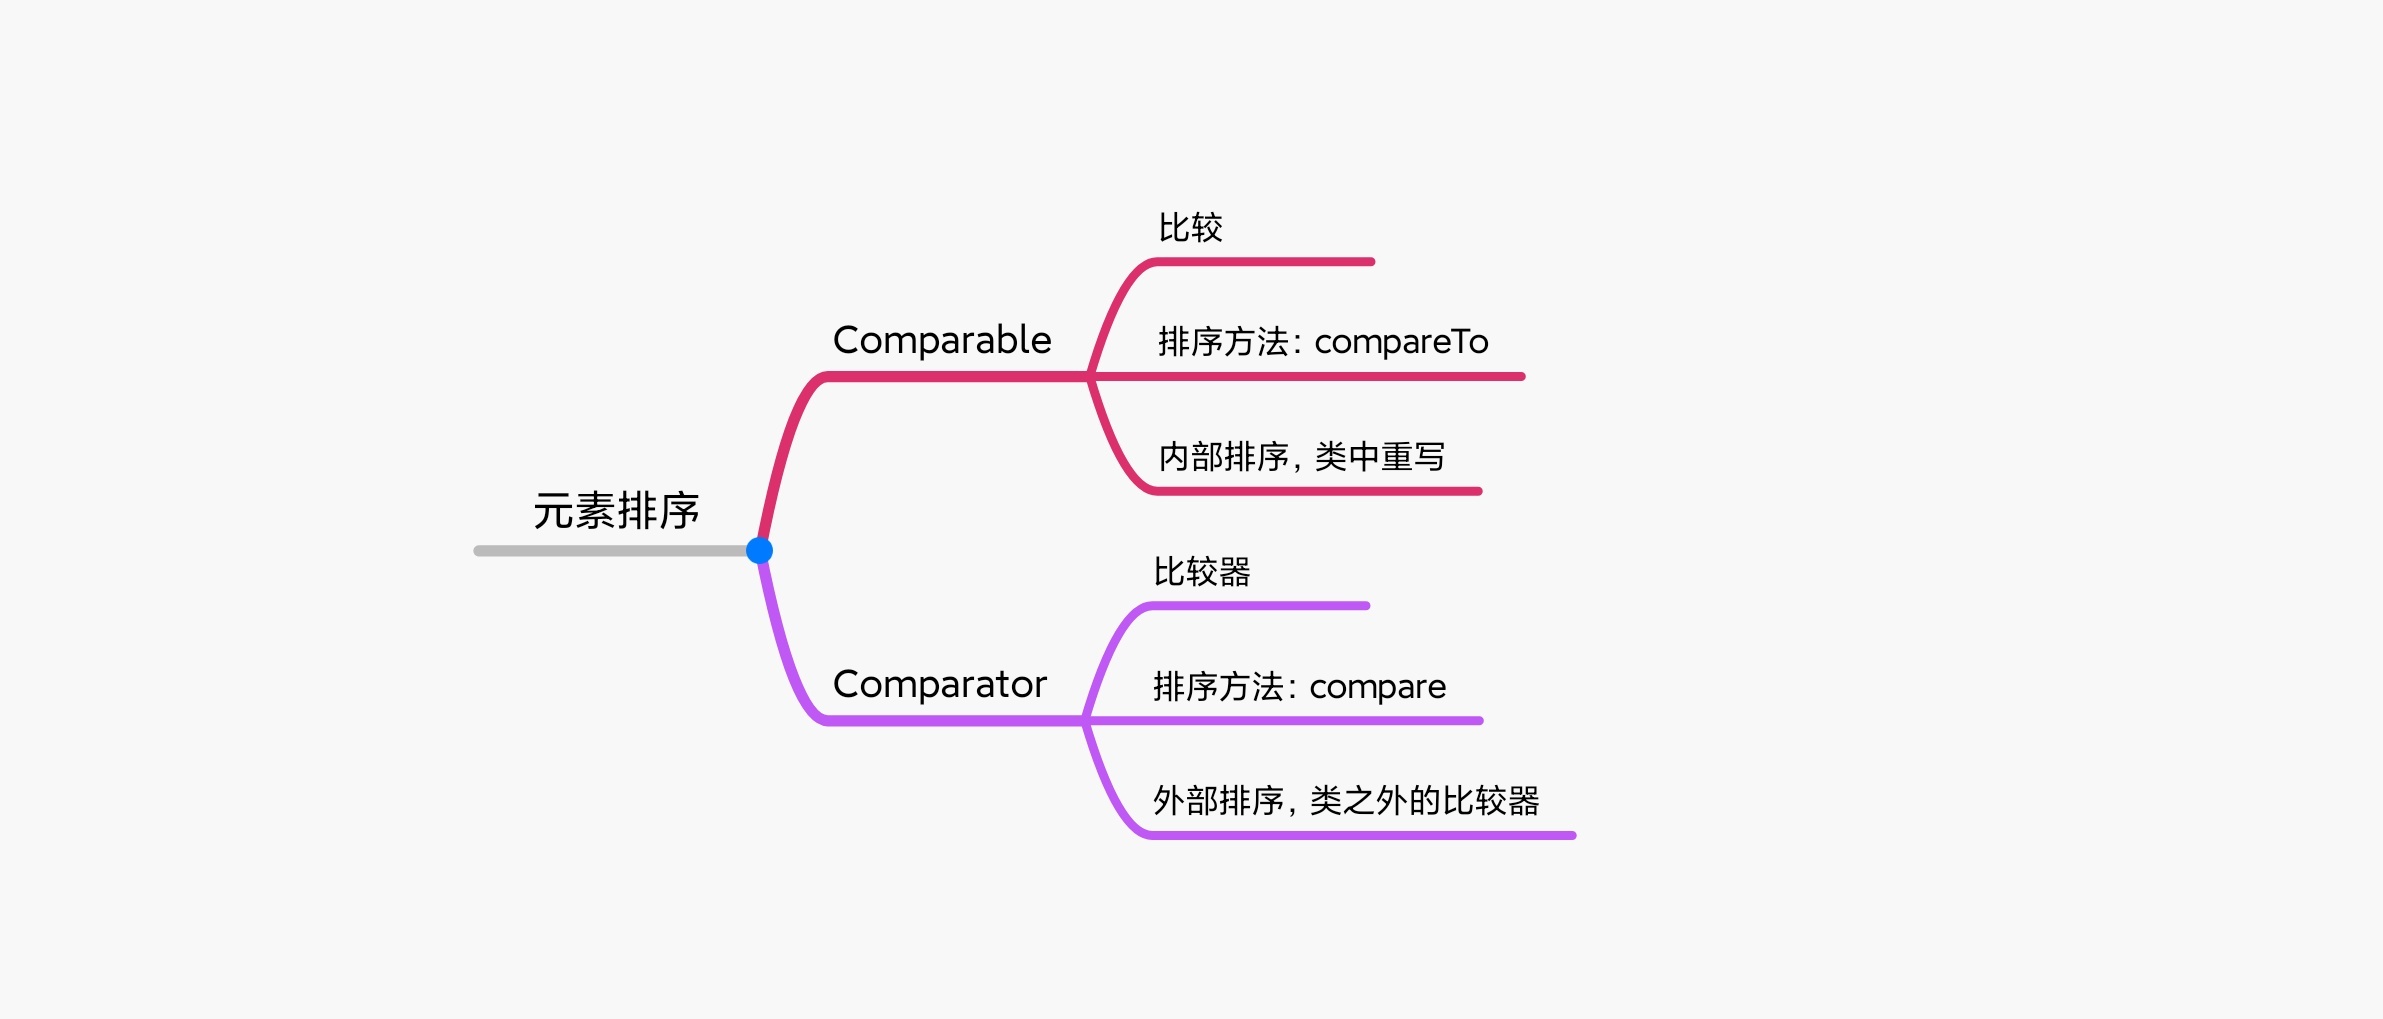 面试官：元素排序Comparable和Comparator有什么区别？